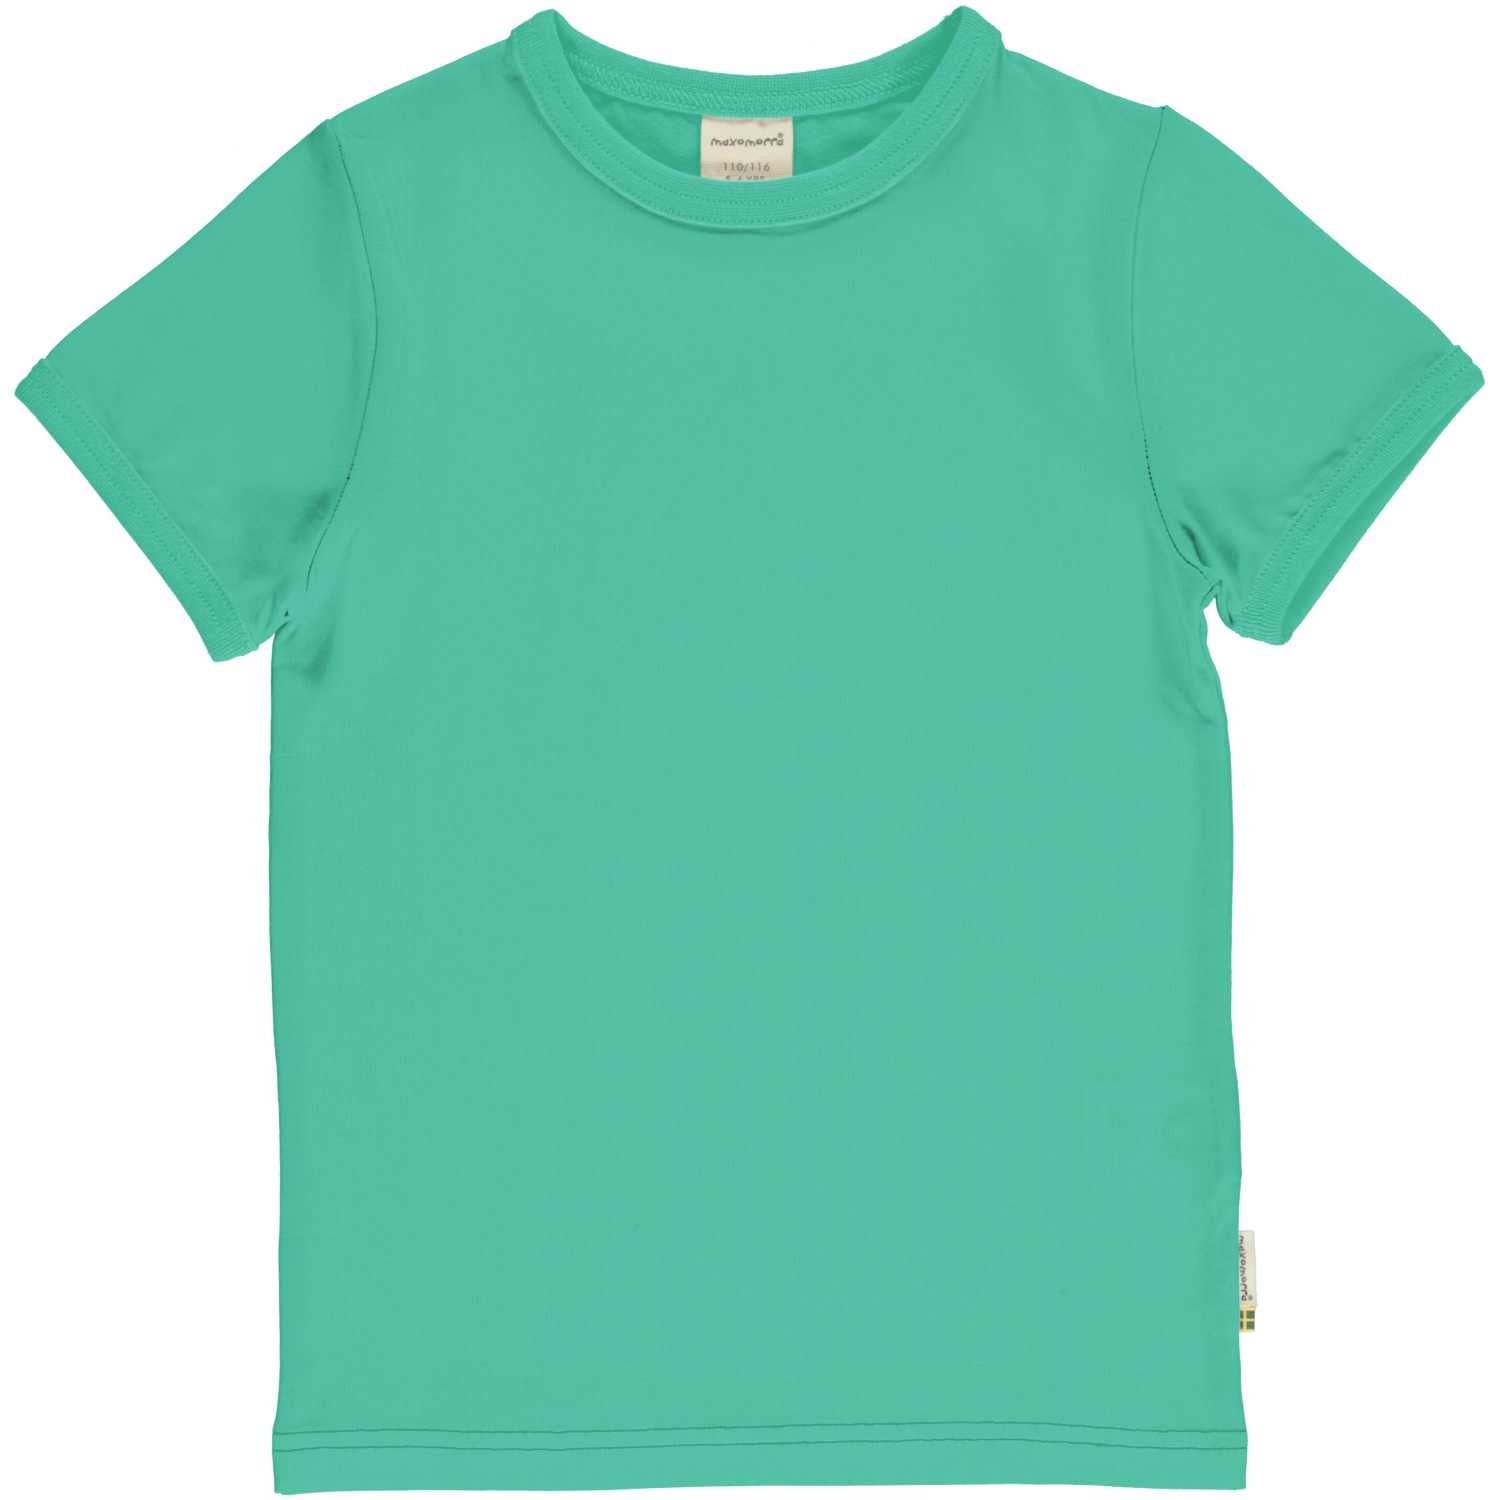 Maxomorra Solid T-Shirt Dxbas11-Sxbas35 Green Clothing 3-4YRS / Green,5-6YRS / Green,7-8YRS / Green